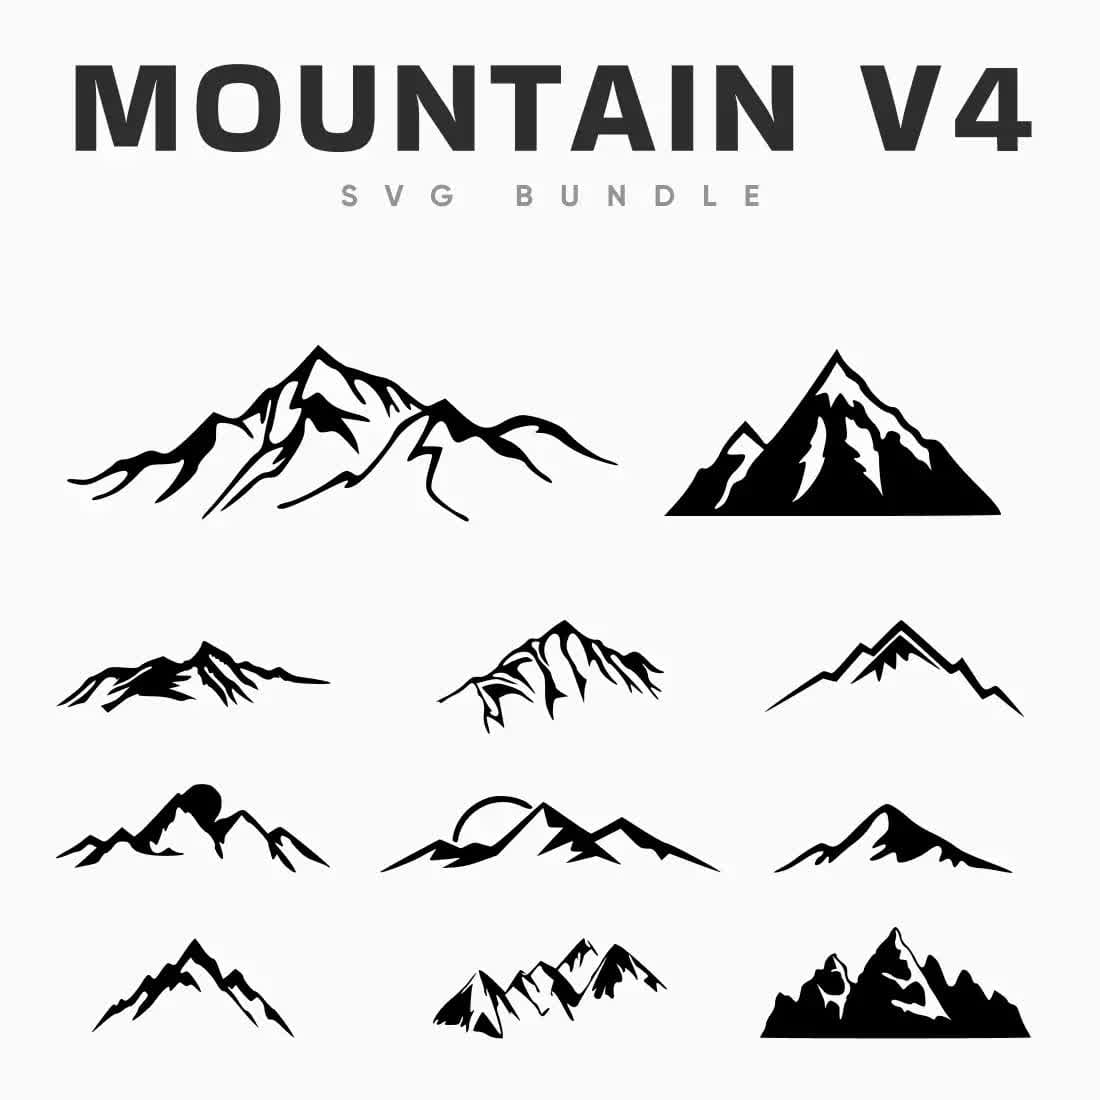 Mountain V4 SVG Bundle Preview 1.